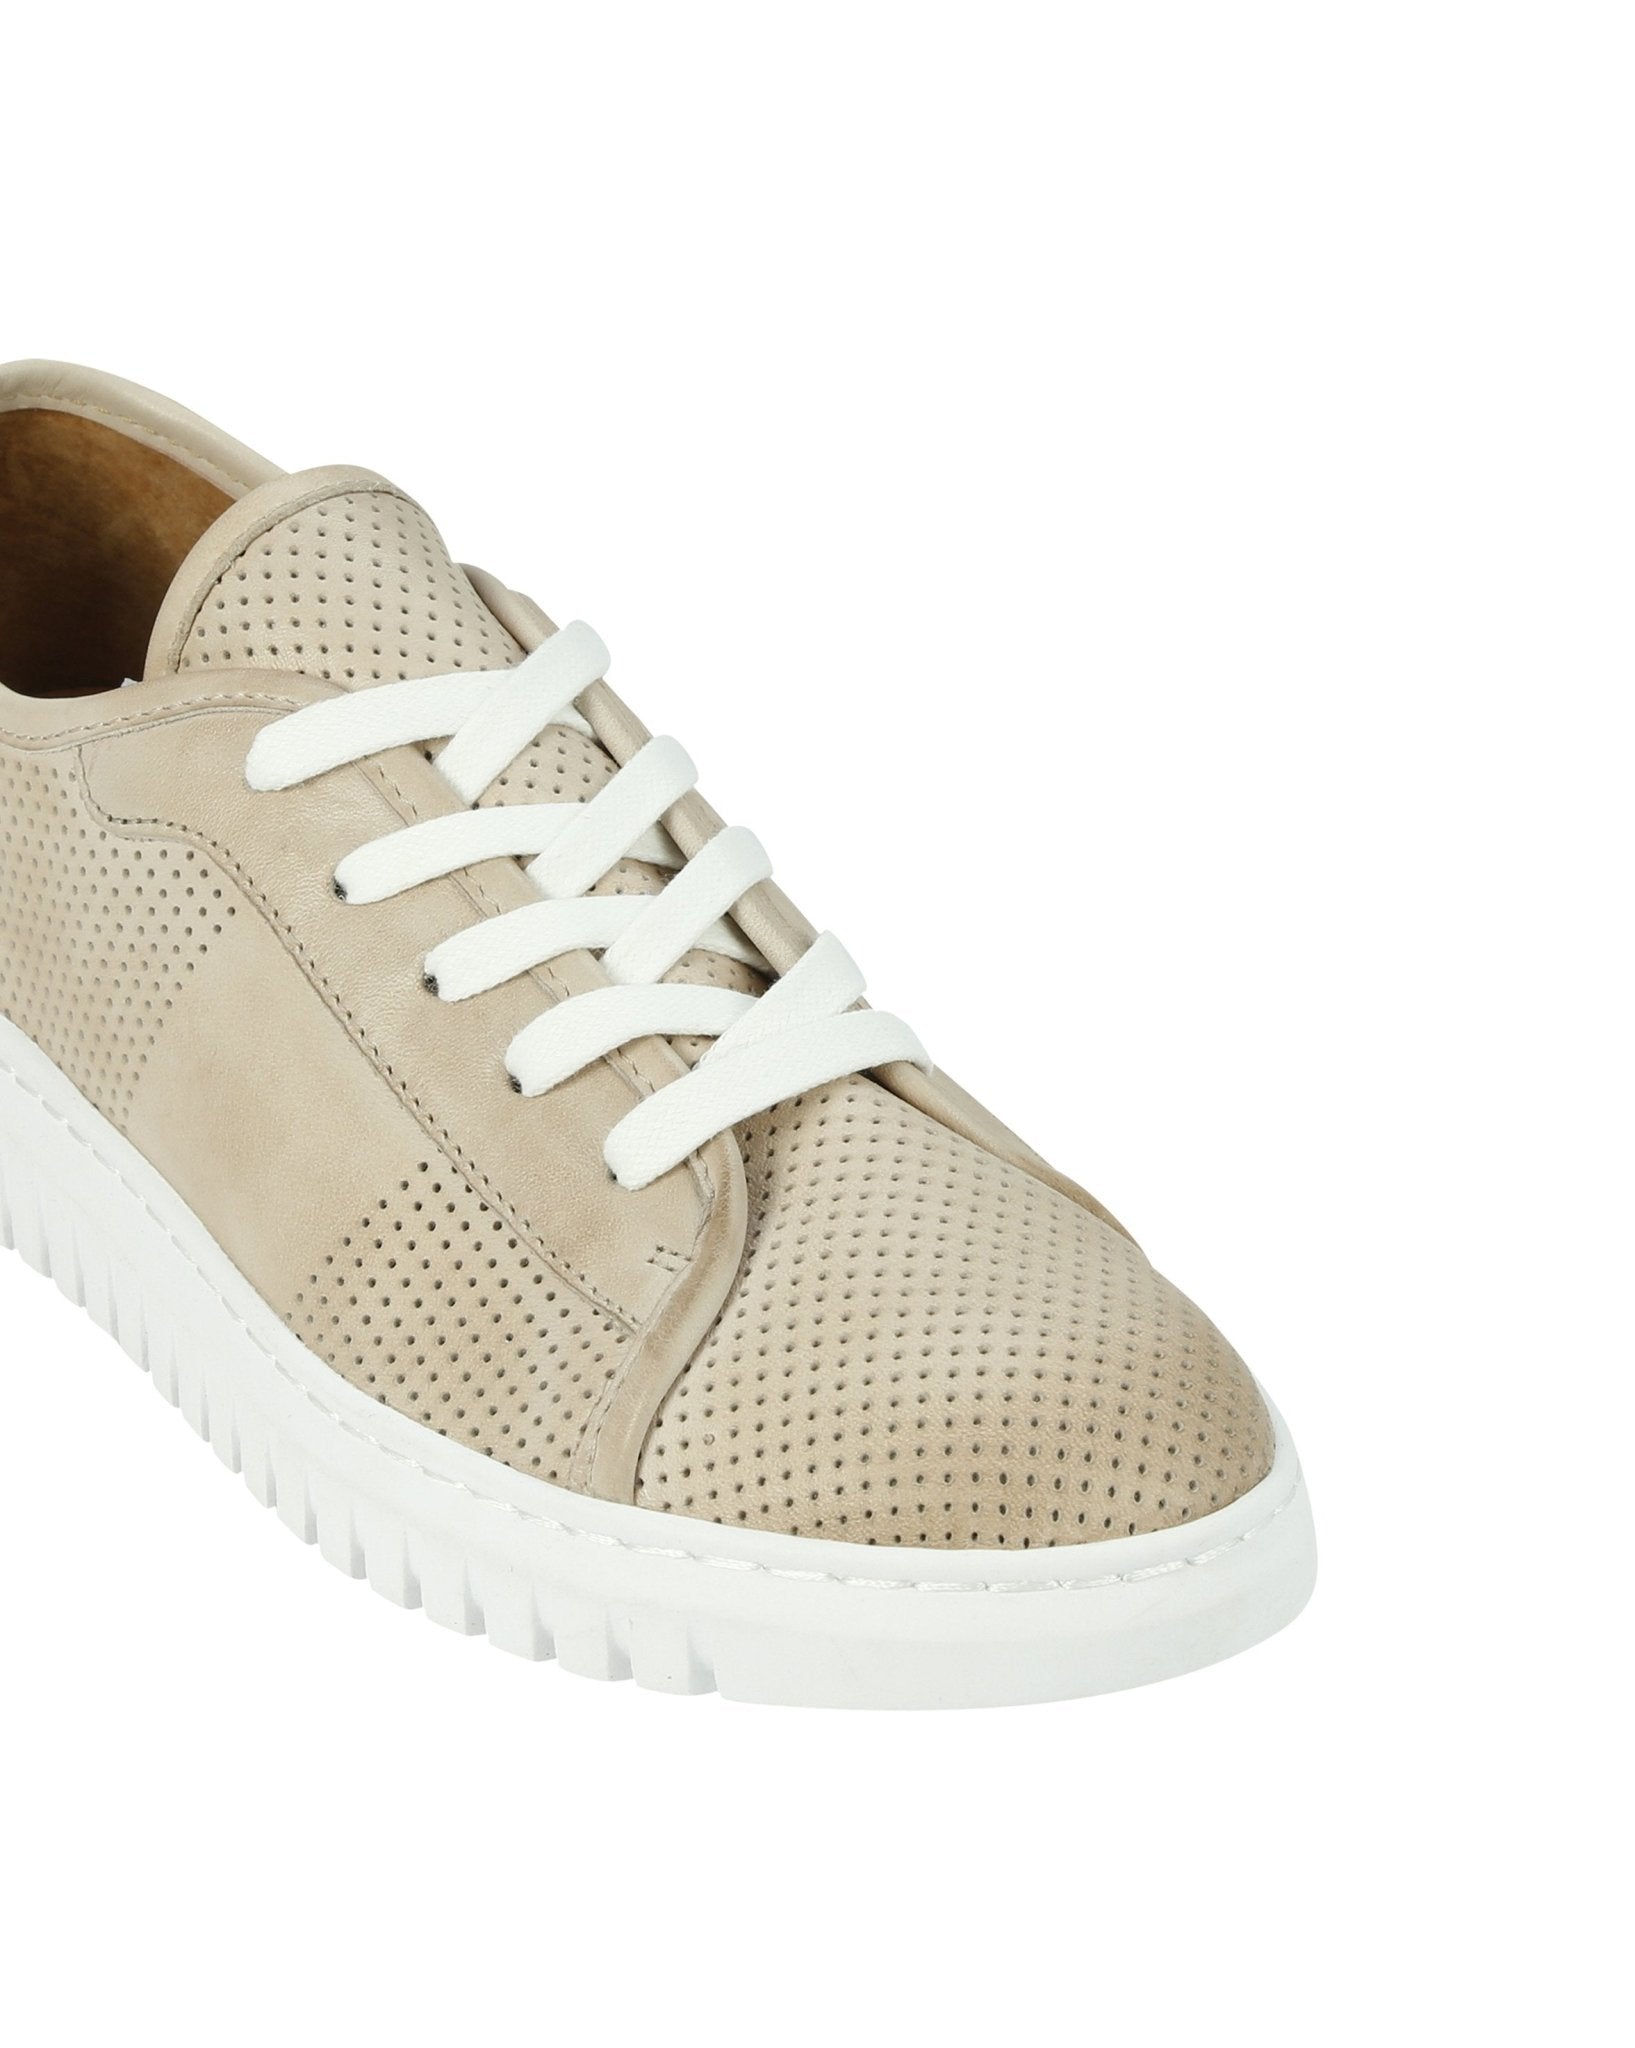 CLASSIE - EOS Footwear - Low Sneakers #color_blush